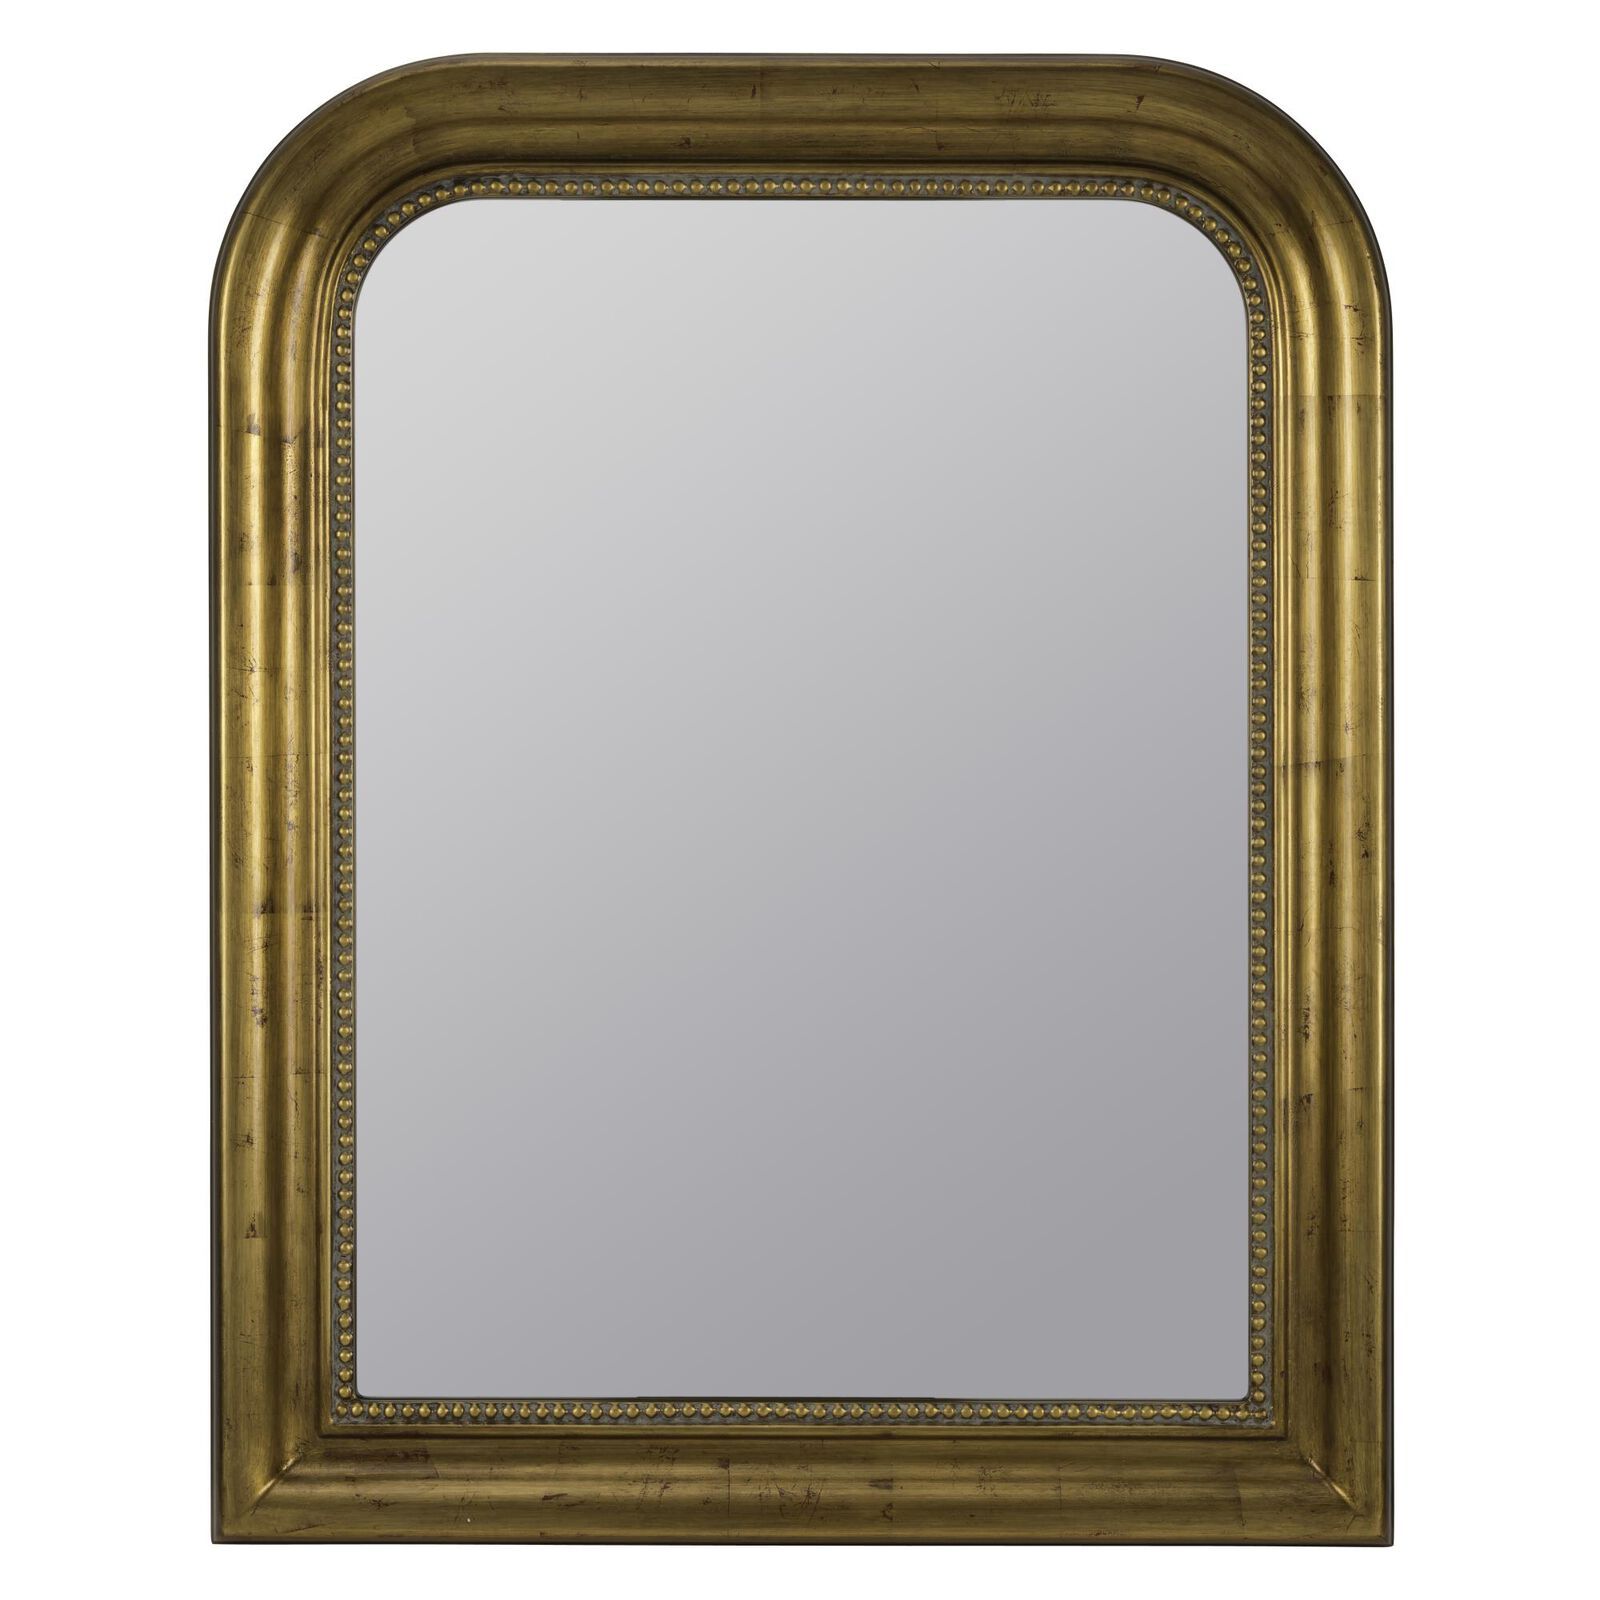 Sepik Wall Mirror by Cooper Classics | Capitol Lighting 1800lighting.com